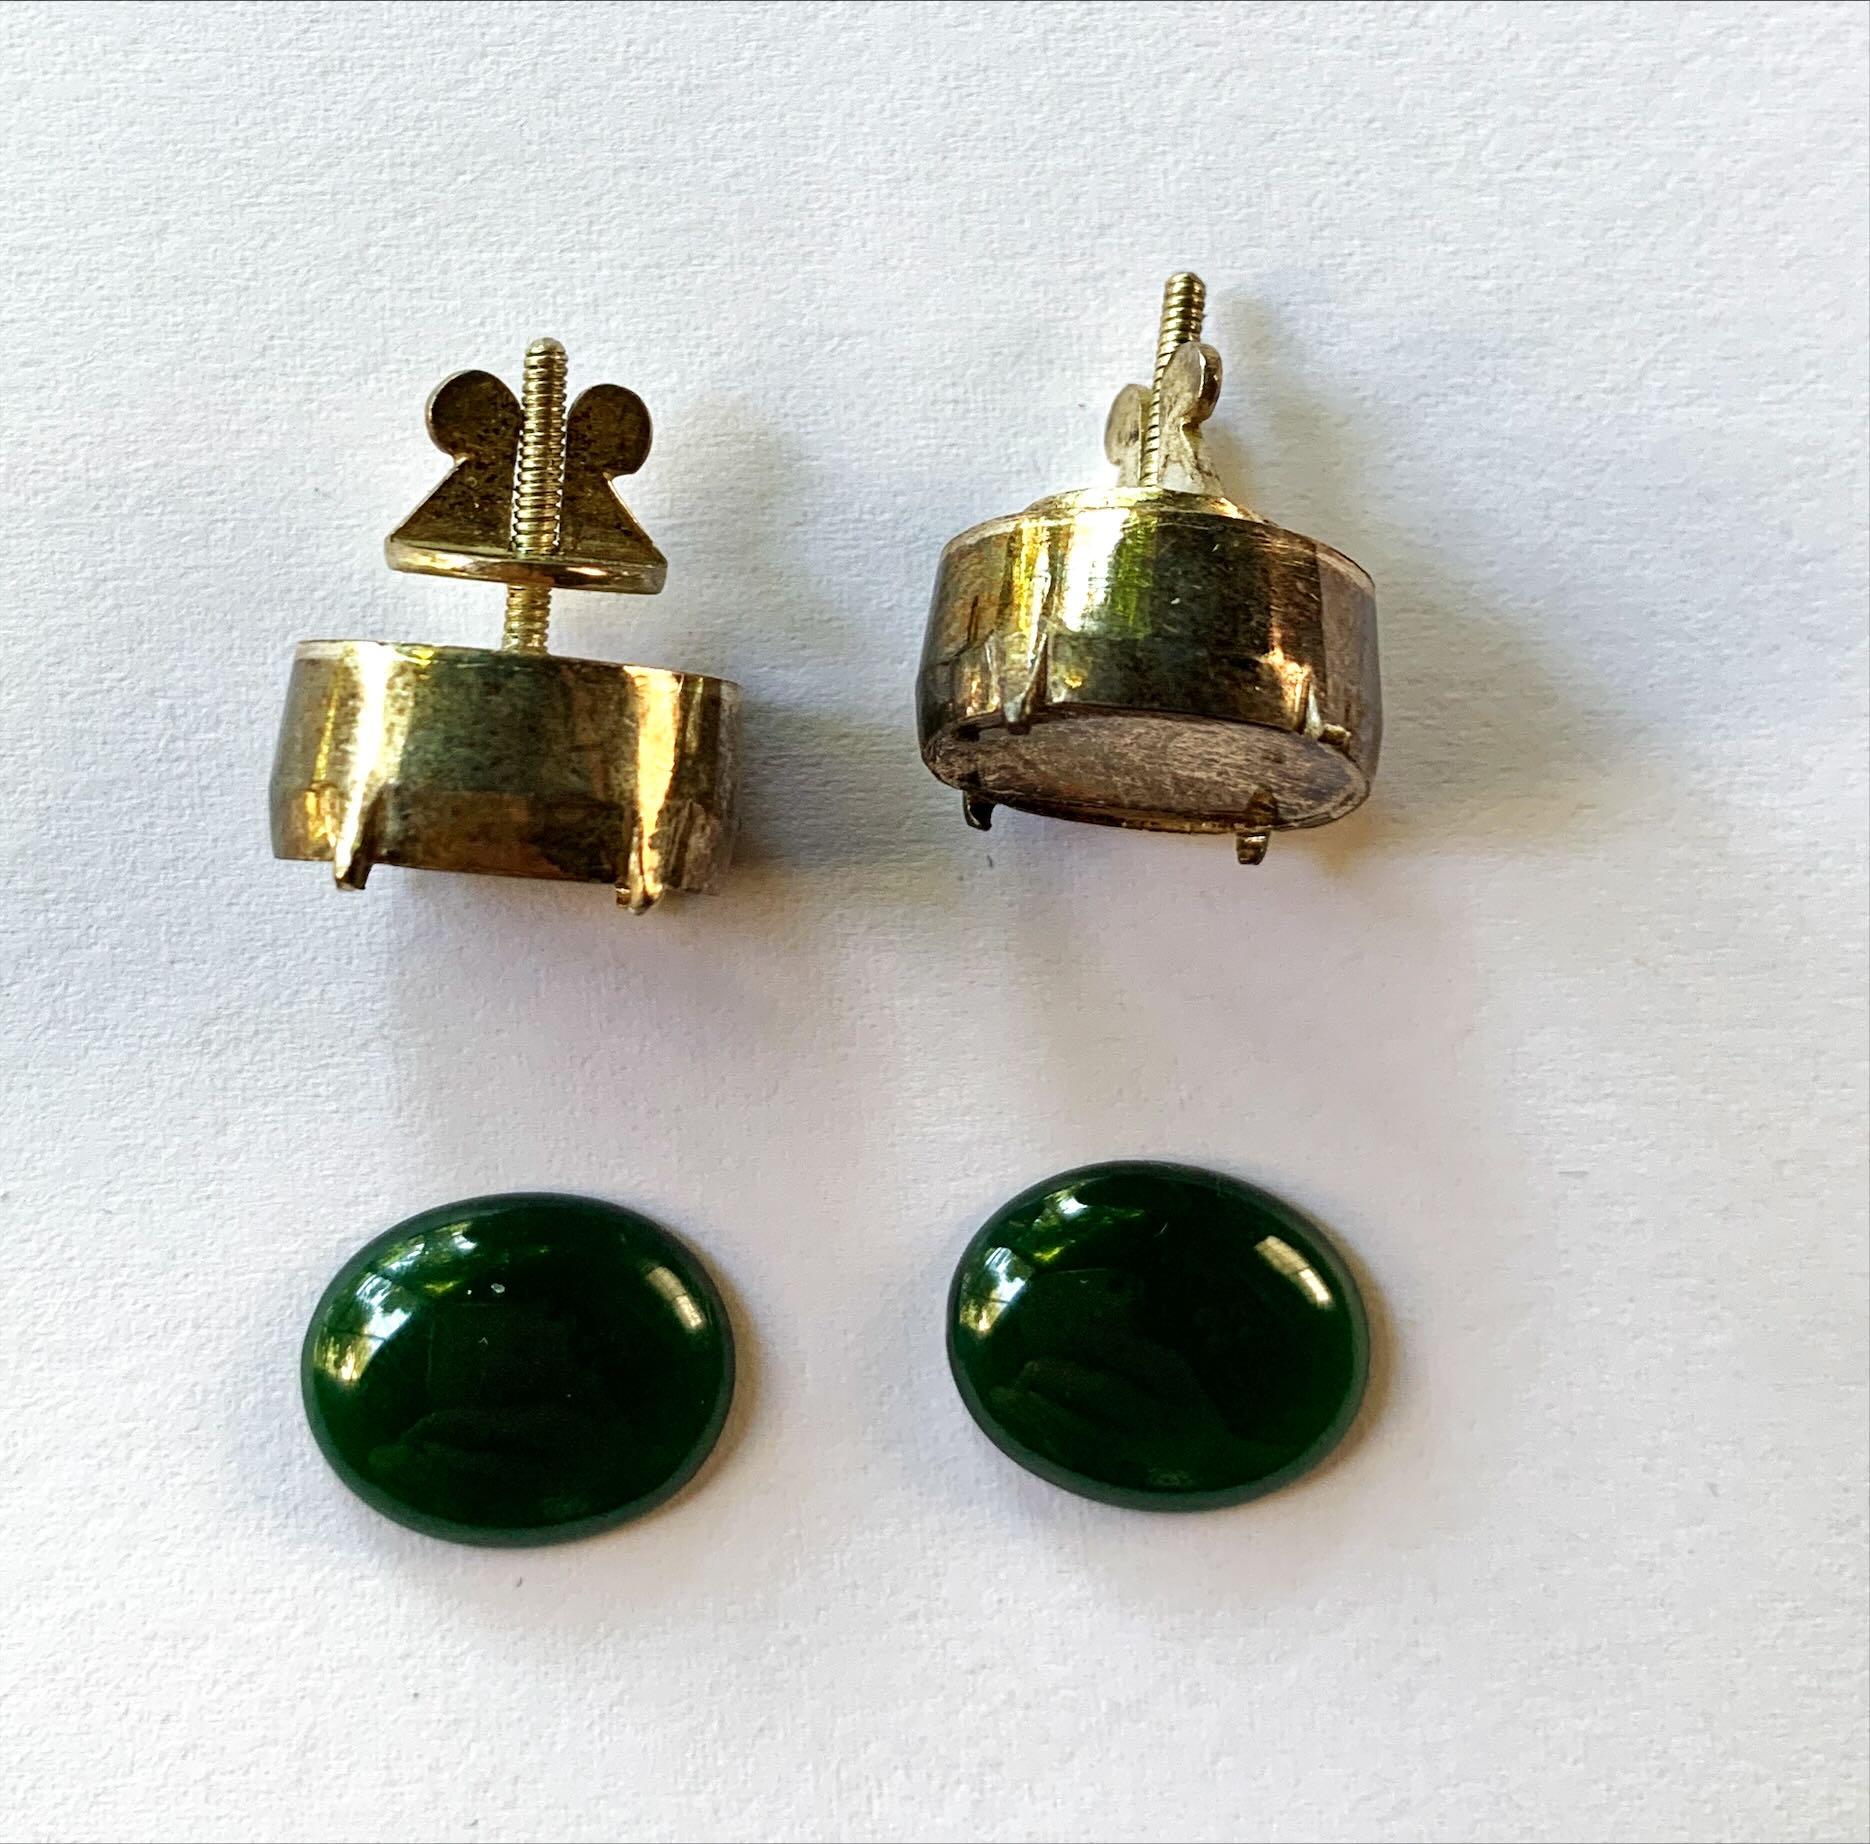 Green Rokan Myanmar Jadeite Loose Stones 2pcs 4.3/4.6 ct Grade A #1 For Sale 5